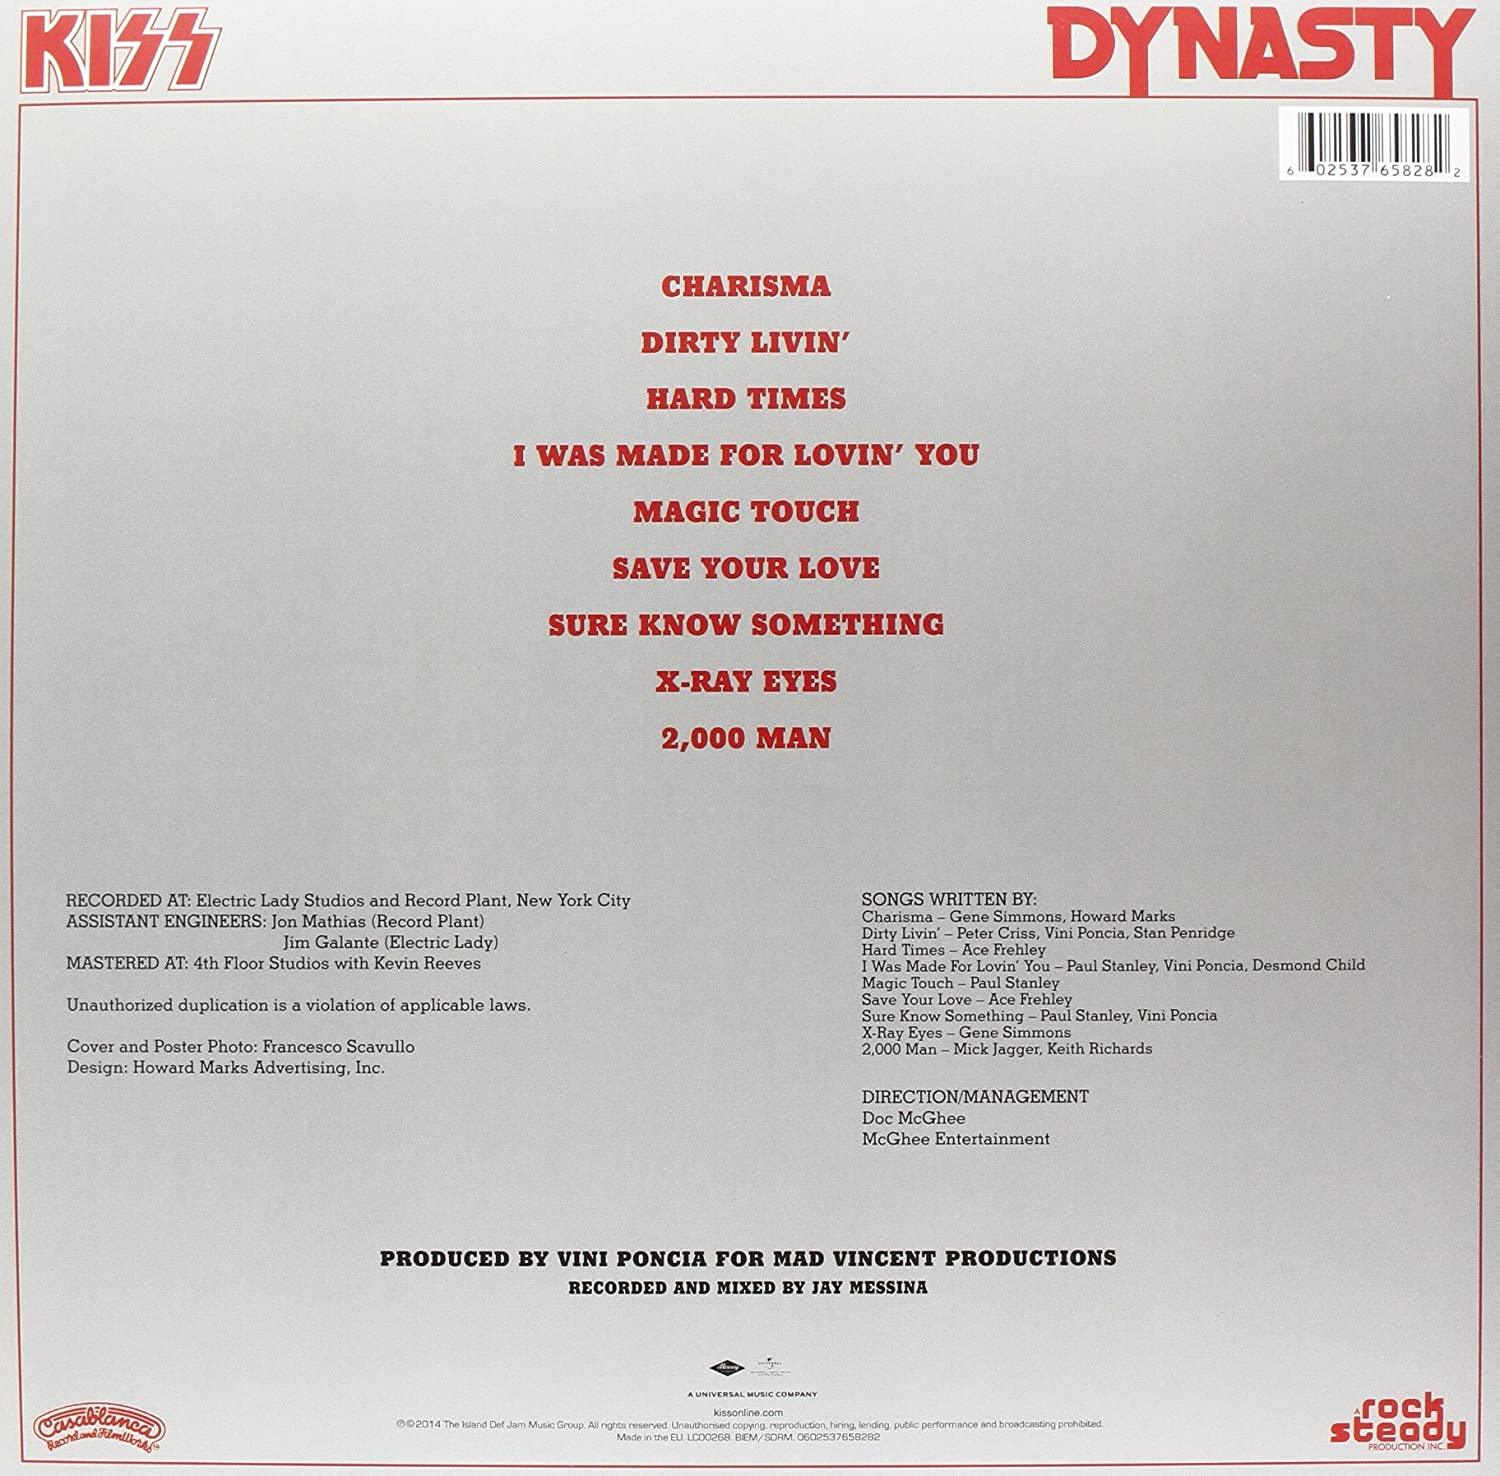 Kiss - Dynasty (Remastered, 180 Gram) (LP) - Joco Records